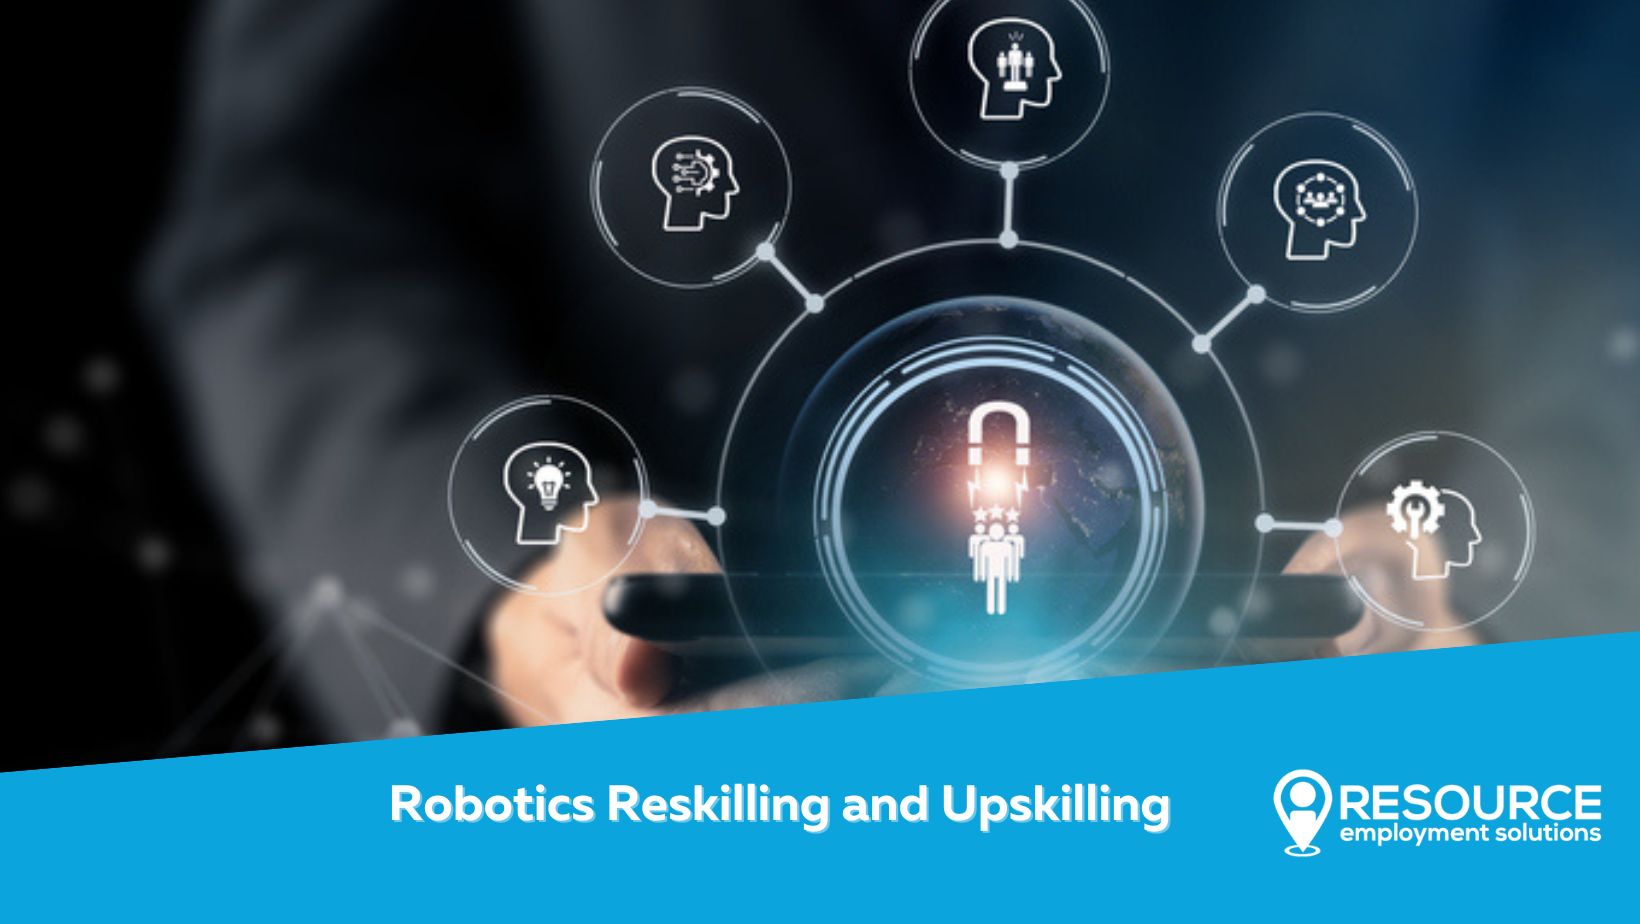 Robotics Reskilling and Upskilling: Nurturing a Future-Ready Workforce Through Lifelong Learning